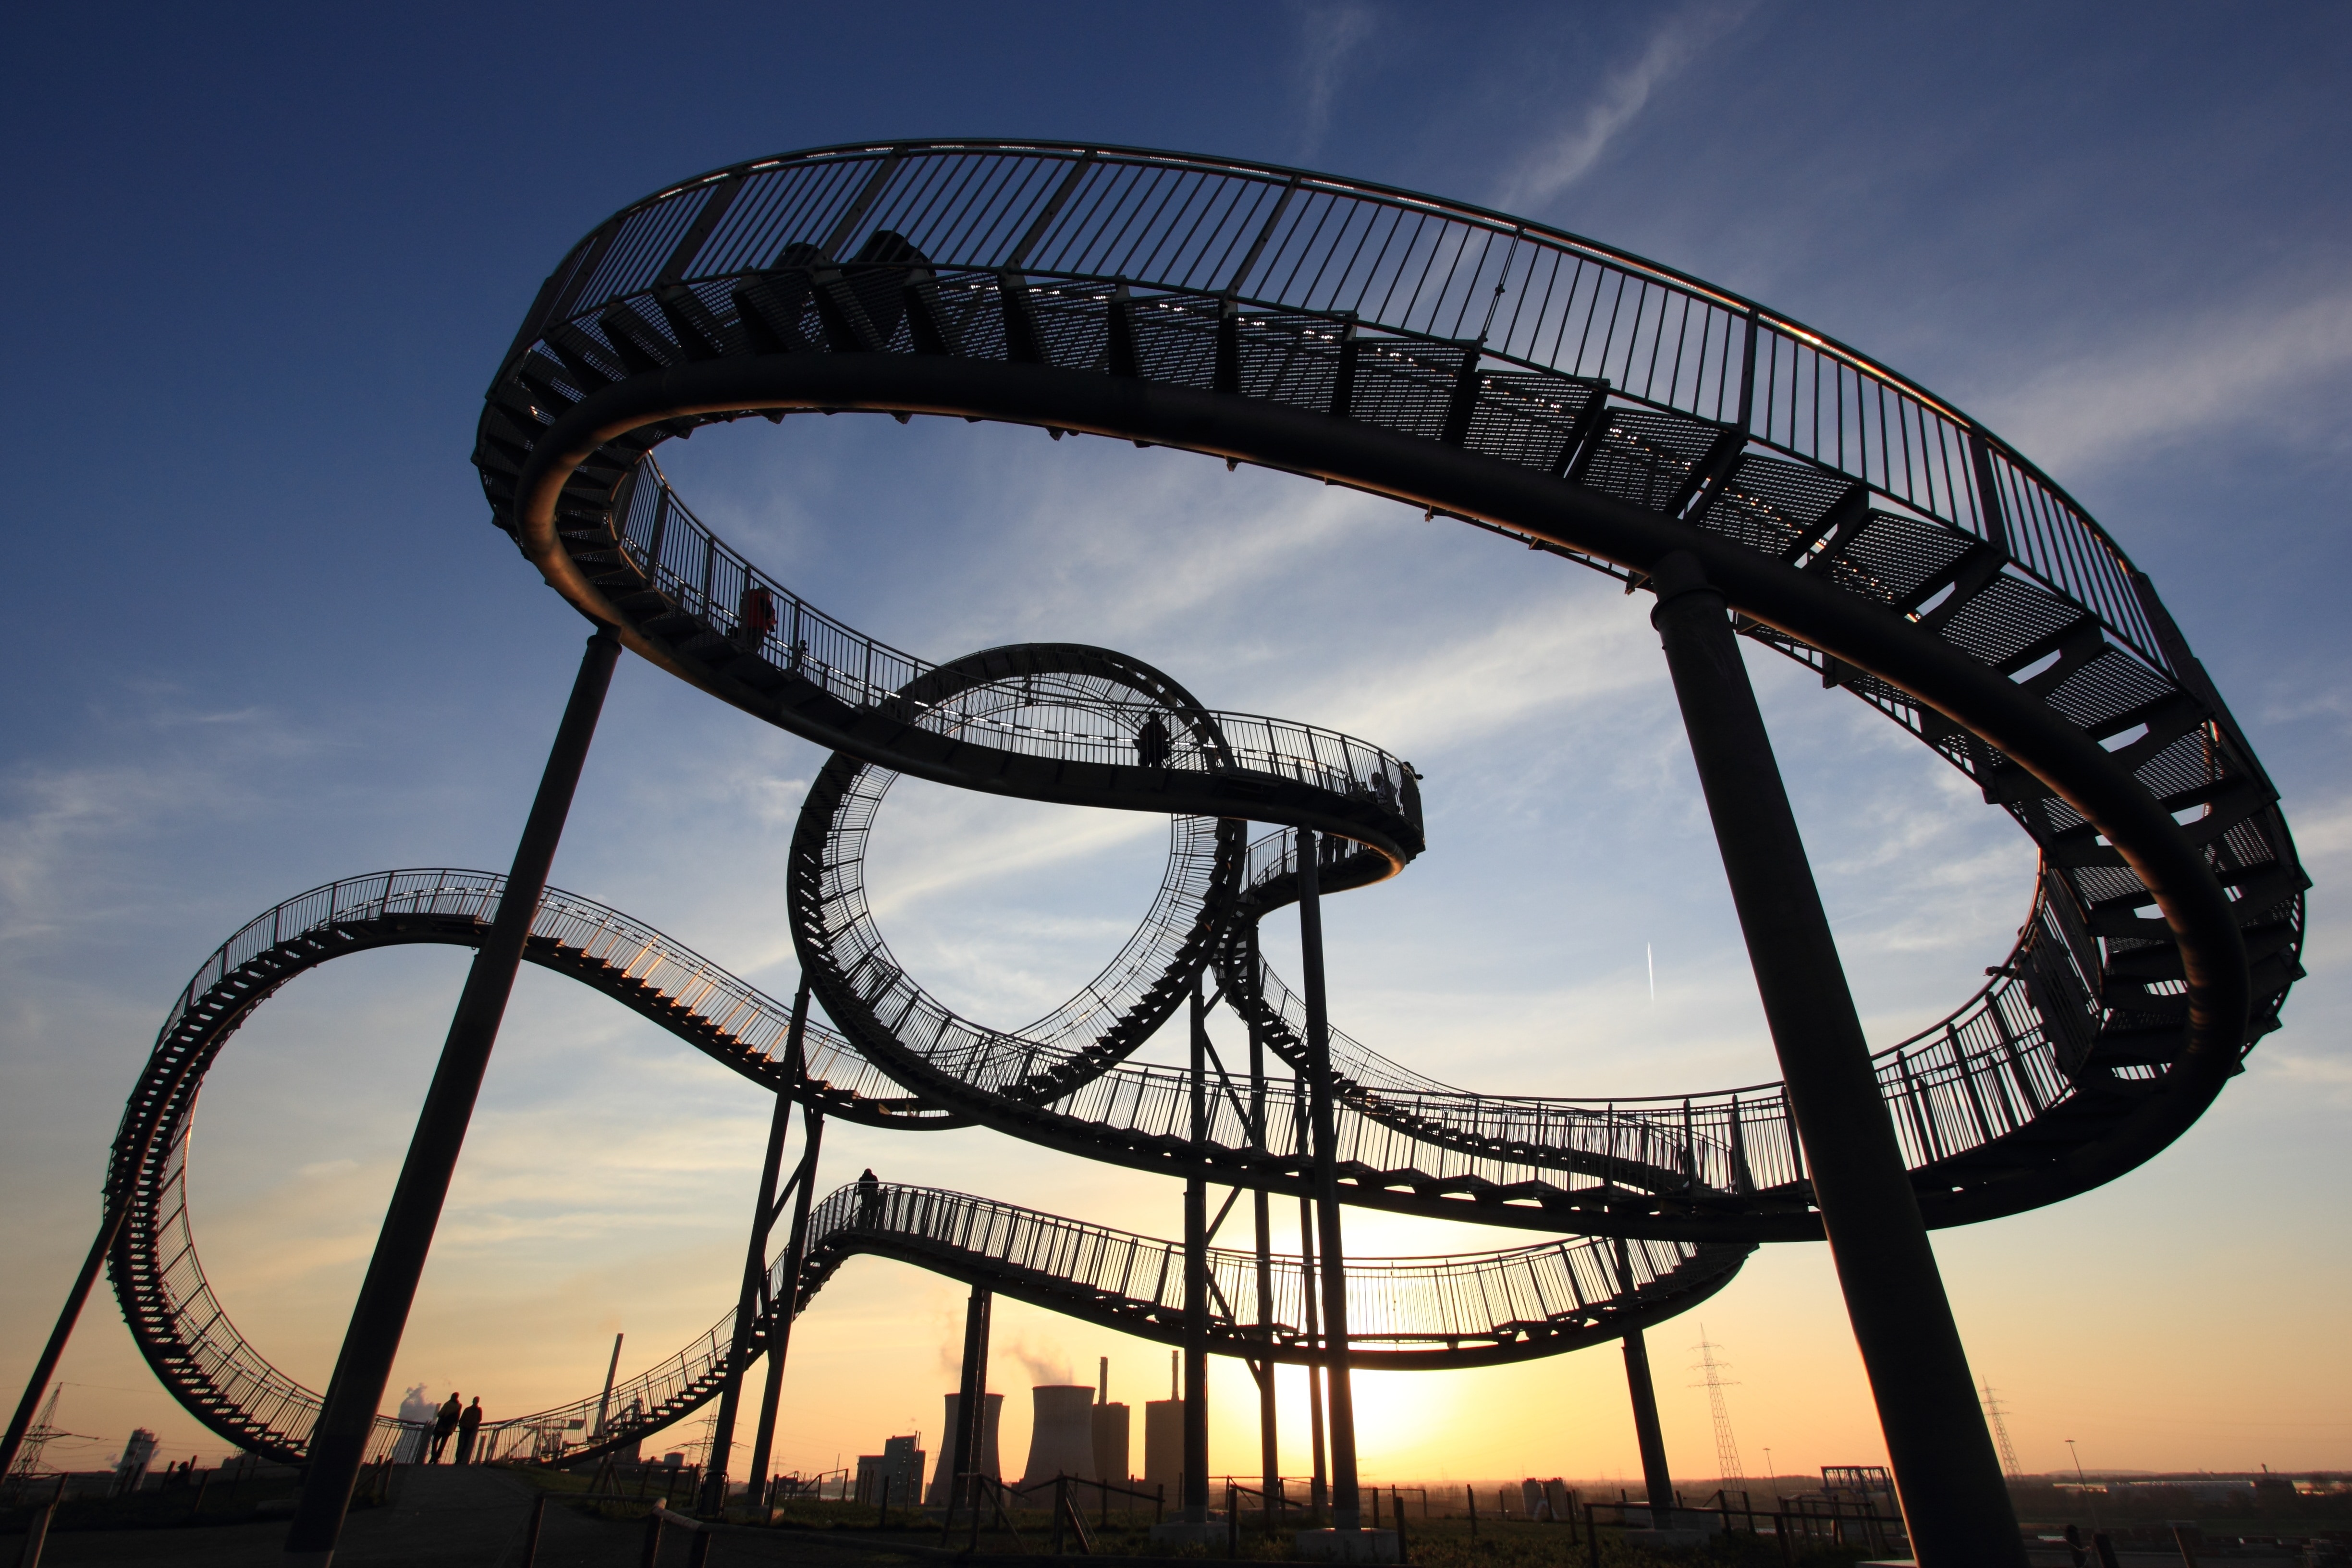 black steel roller coaster ride